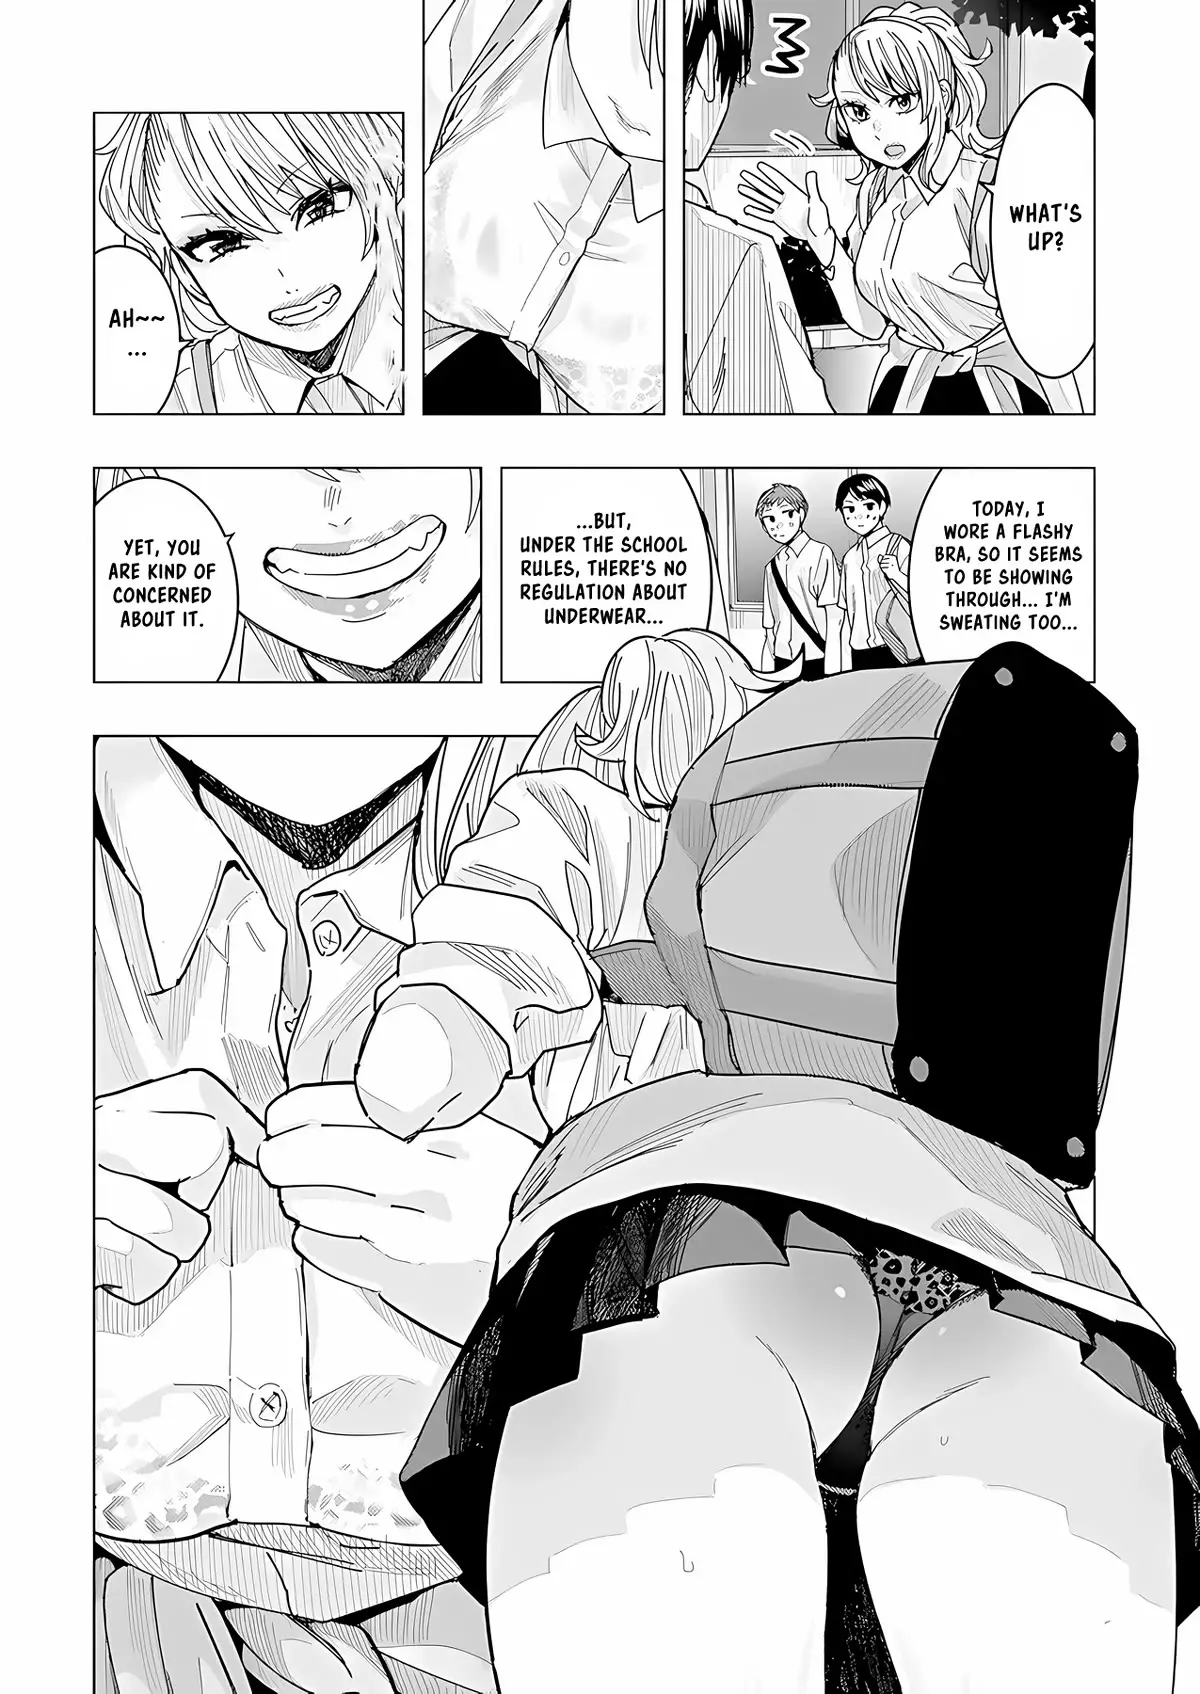 "nobukuni-San" Does She Like Me? - 25 page 10-ec347871